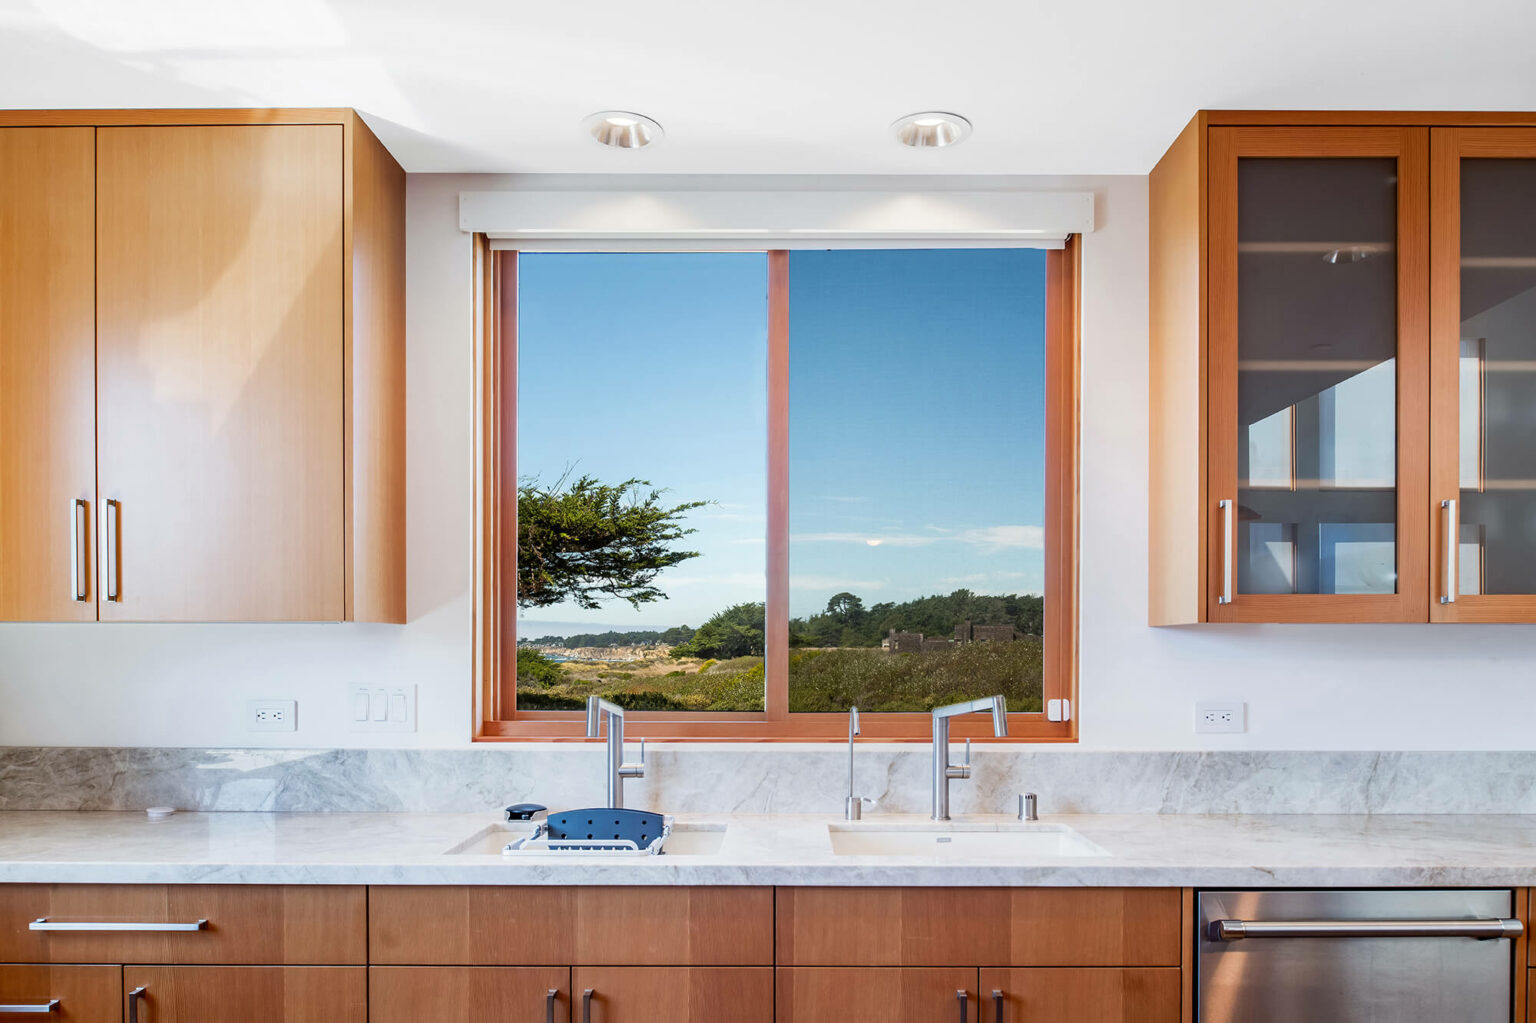 Beach Dreams bright kitchen sink with window